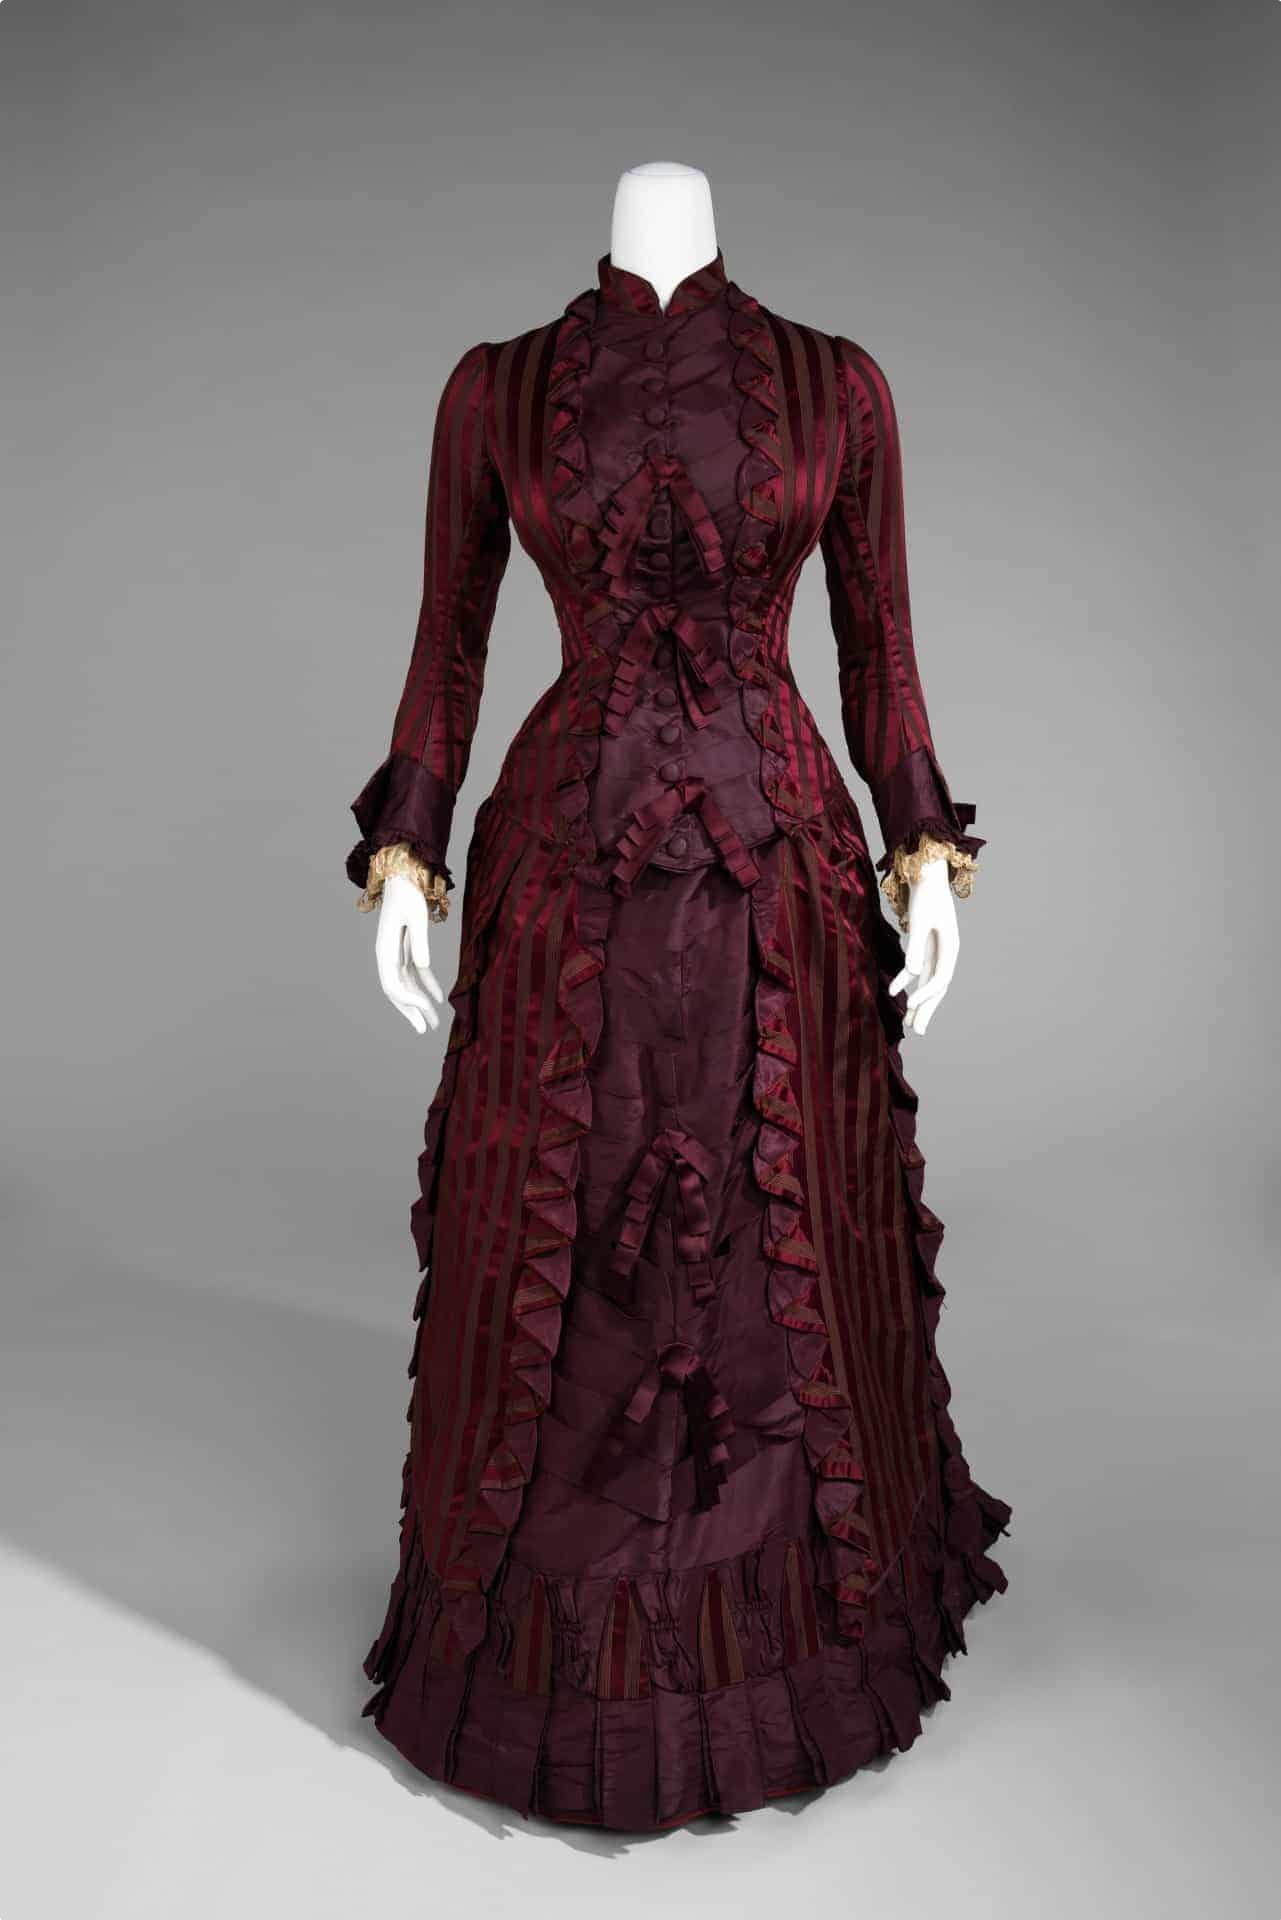 Fashion History: The Victorian Period